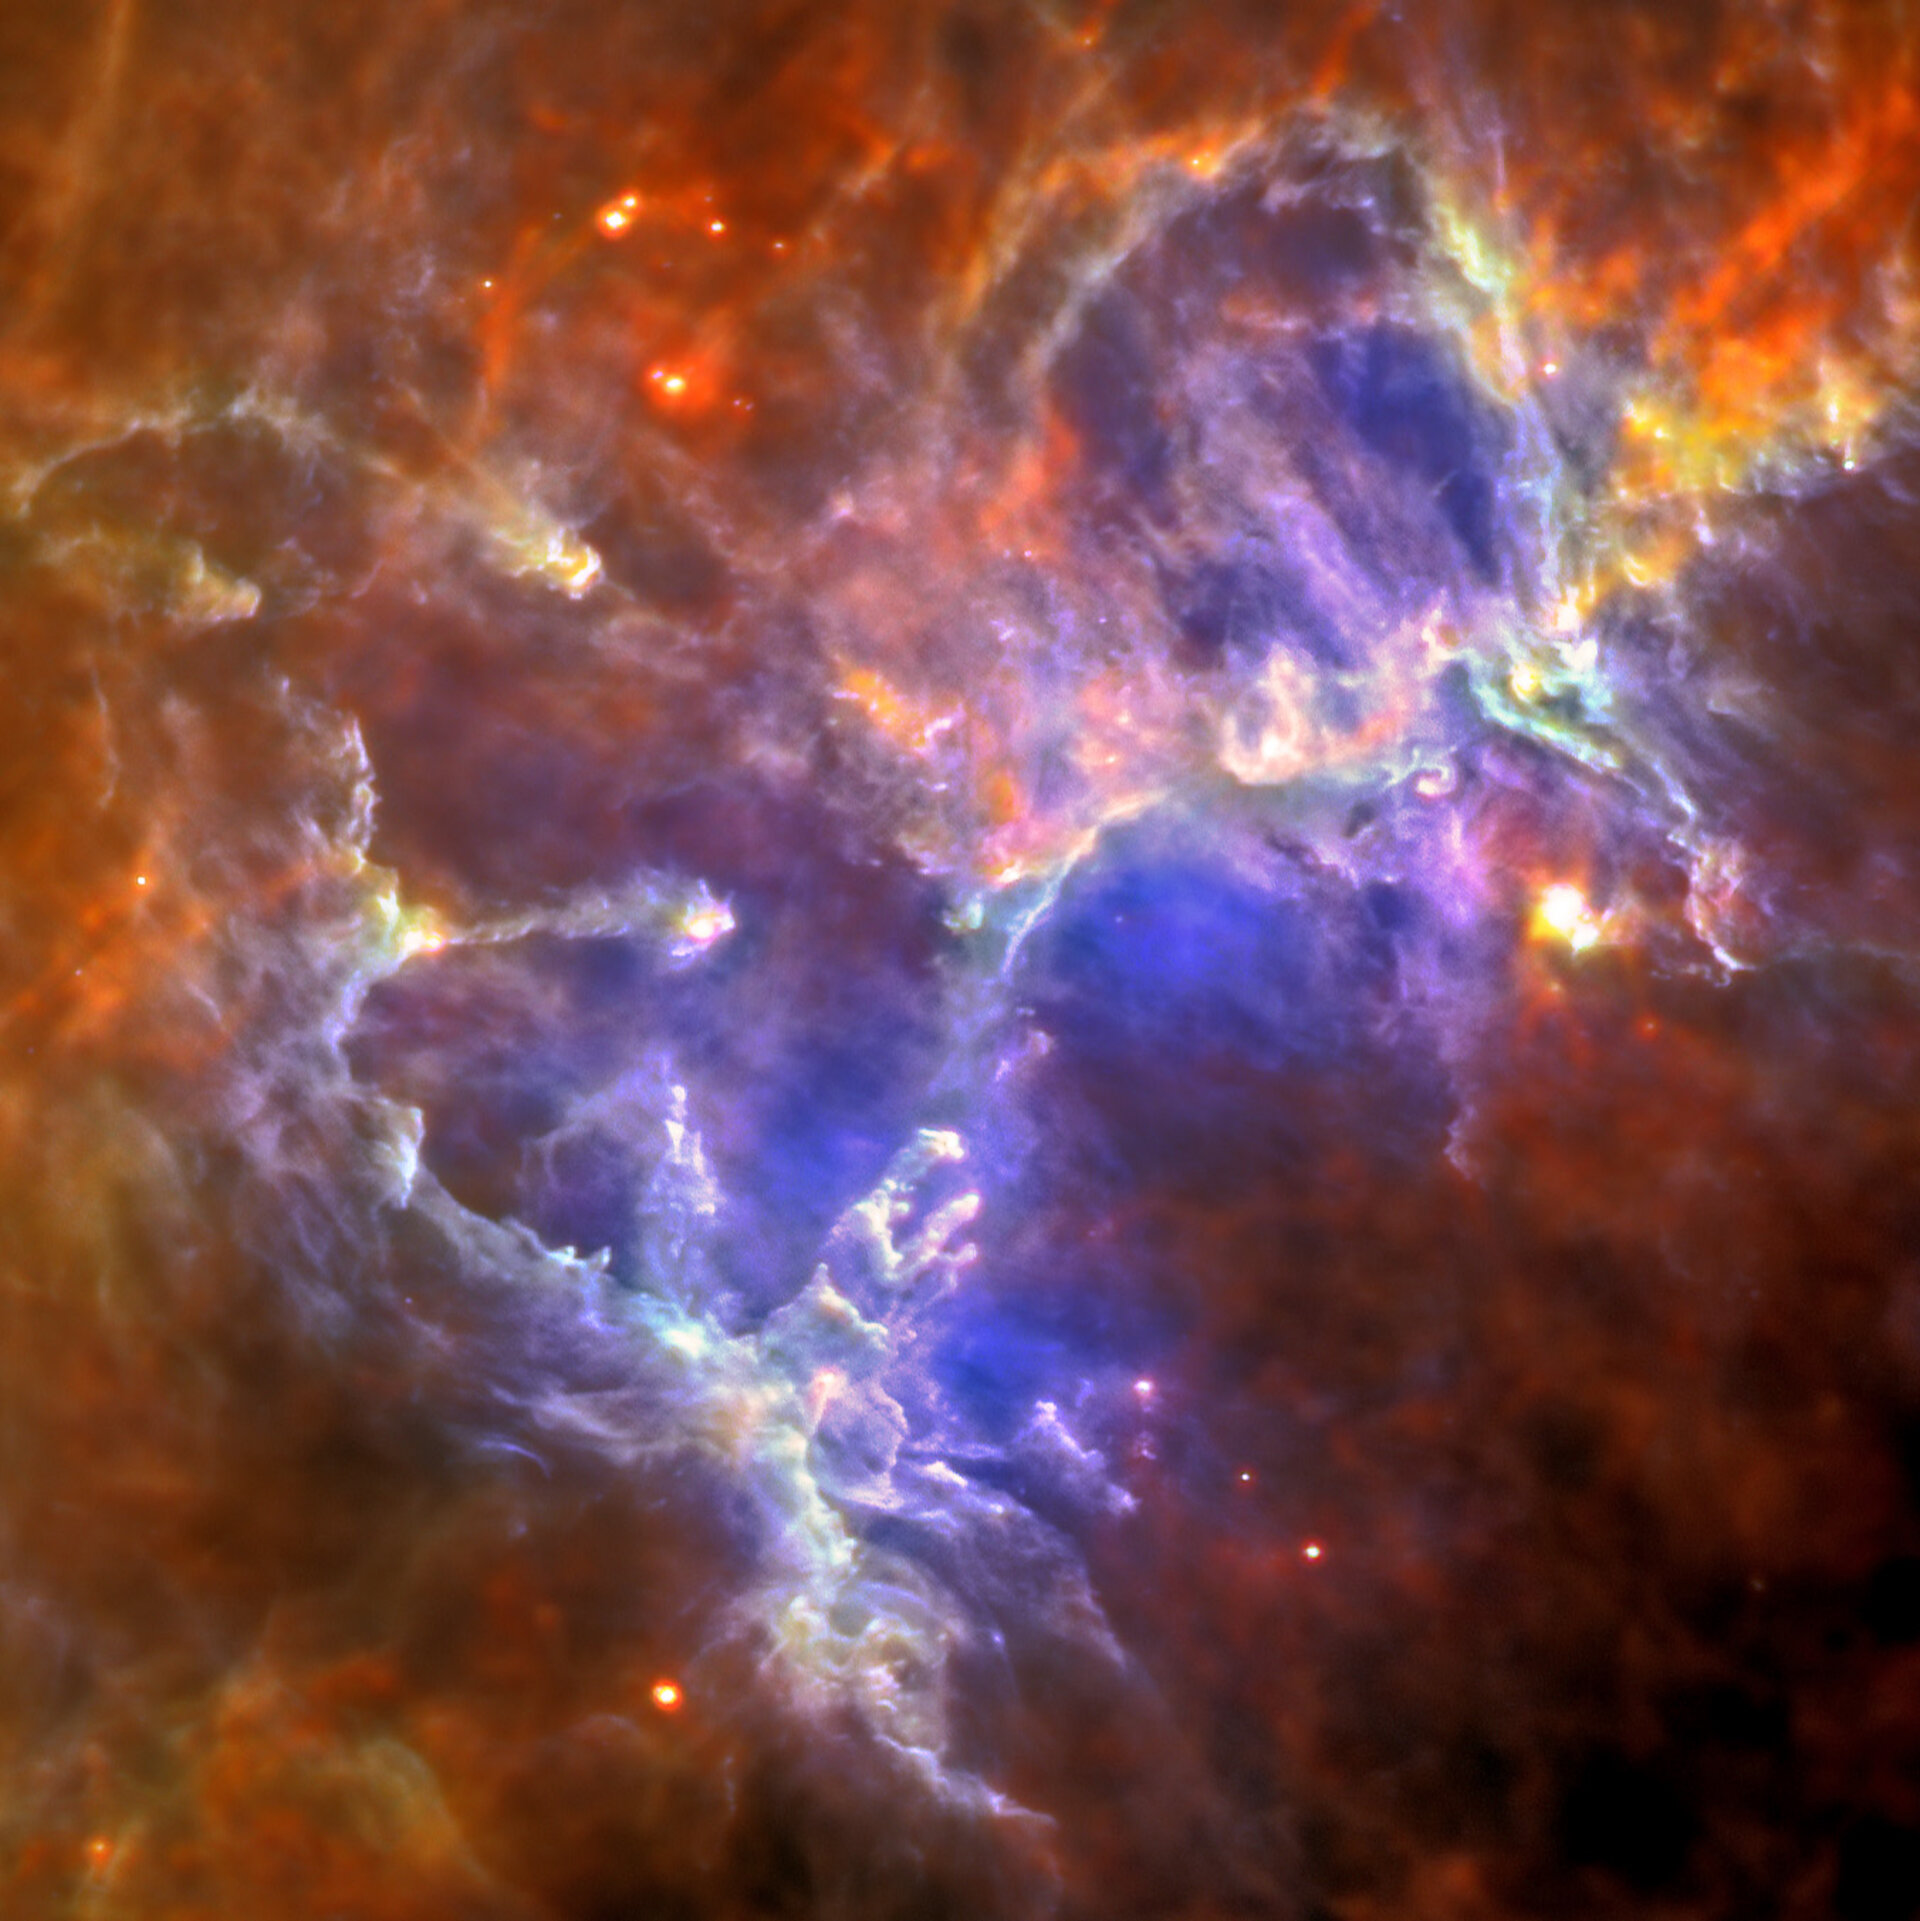 Herschel far-infrared view